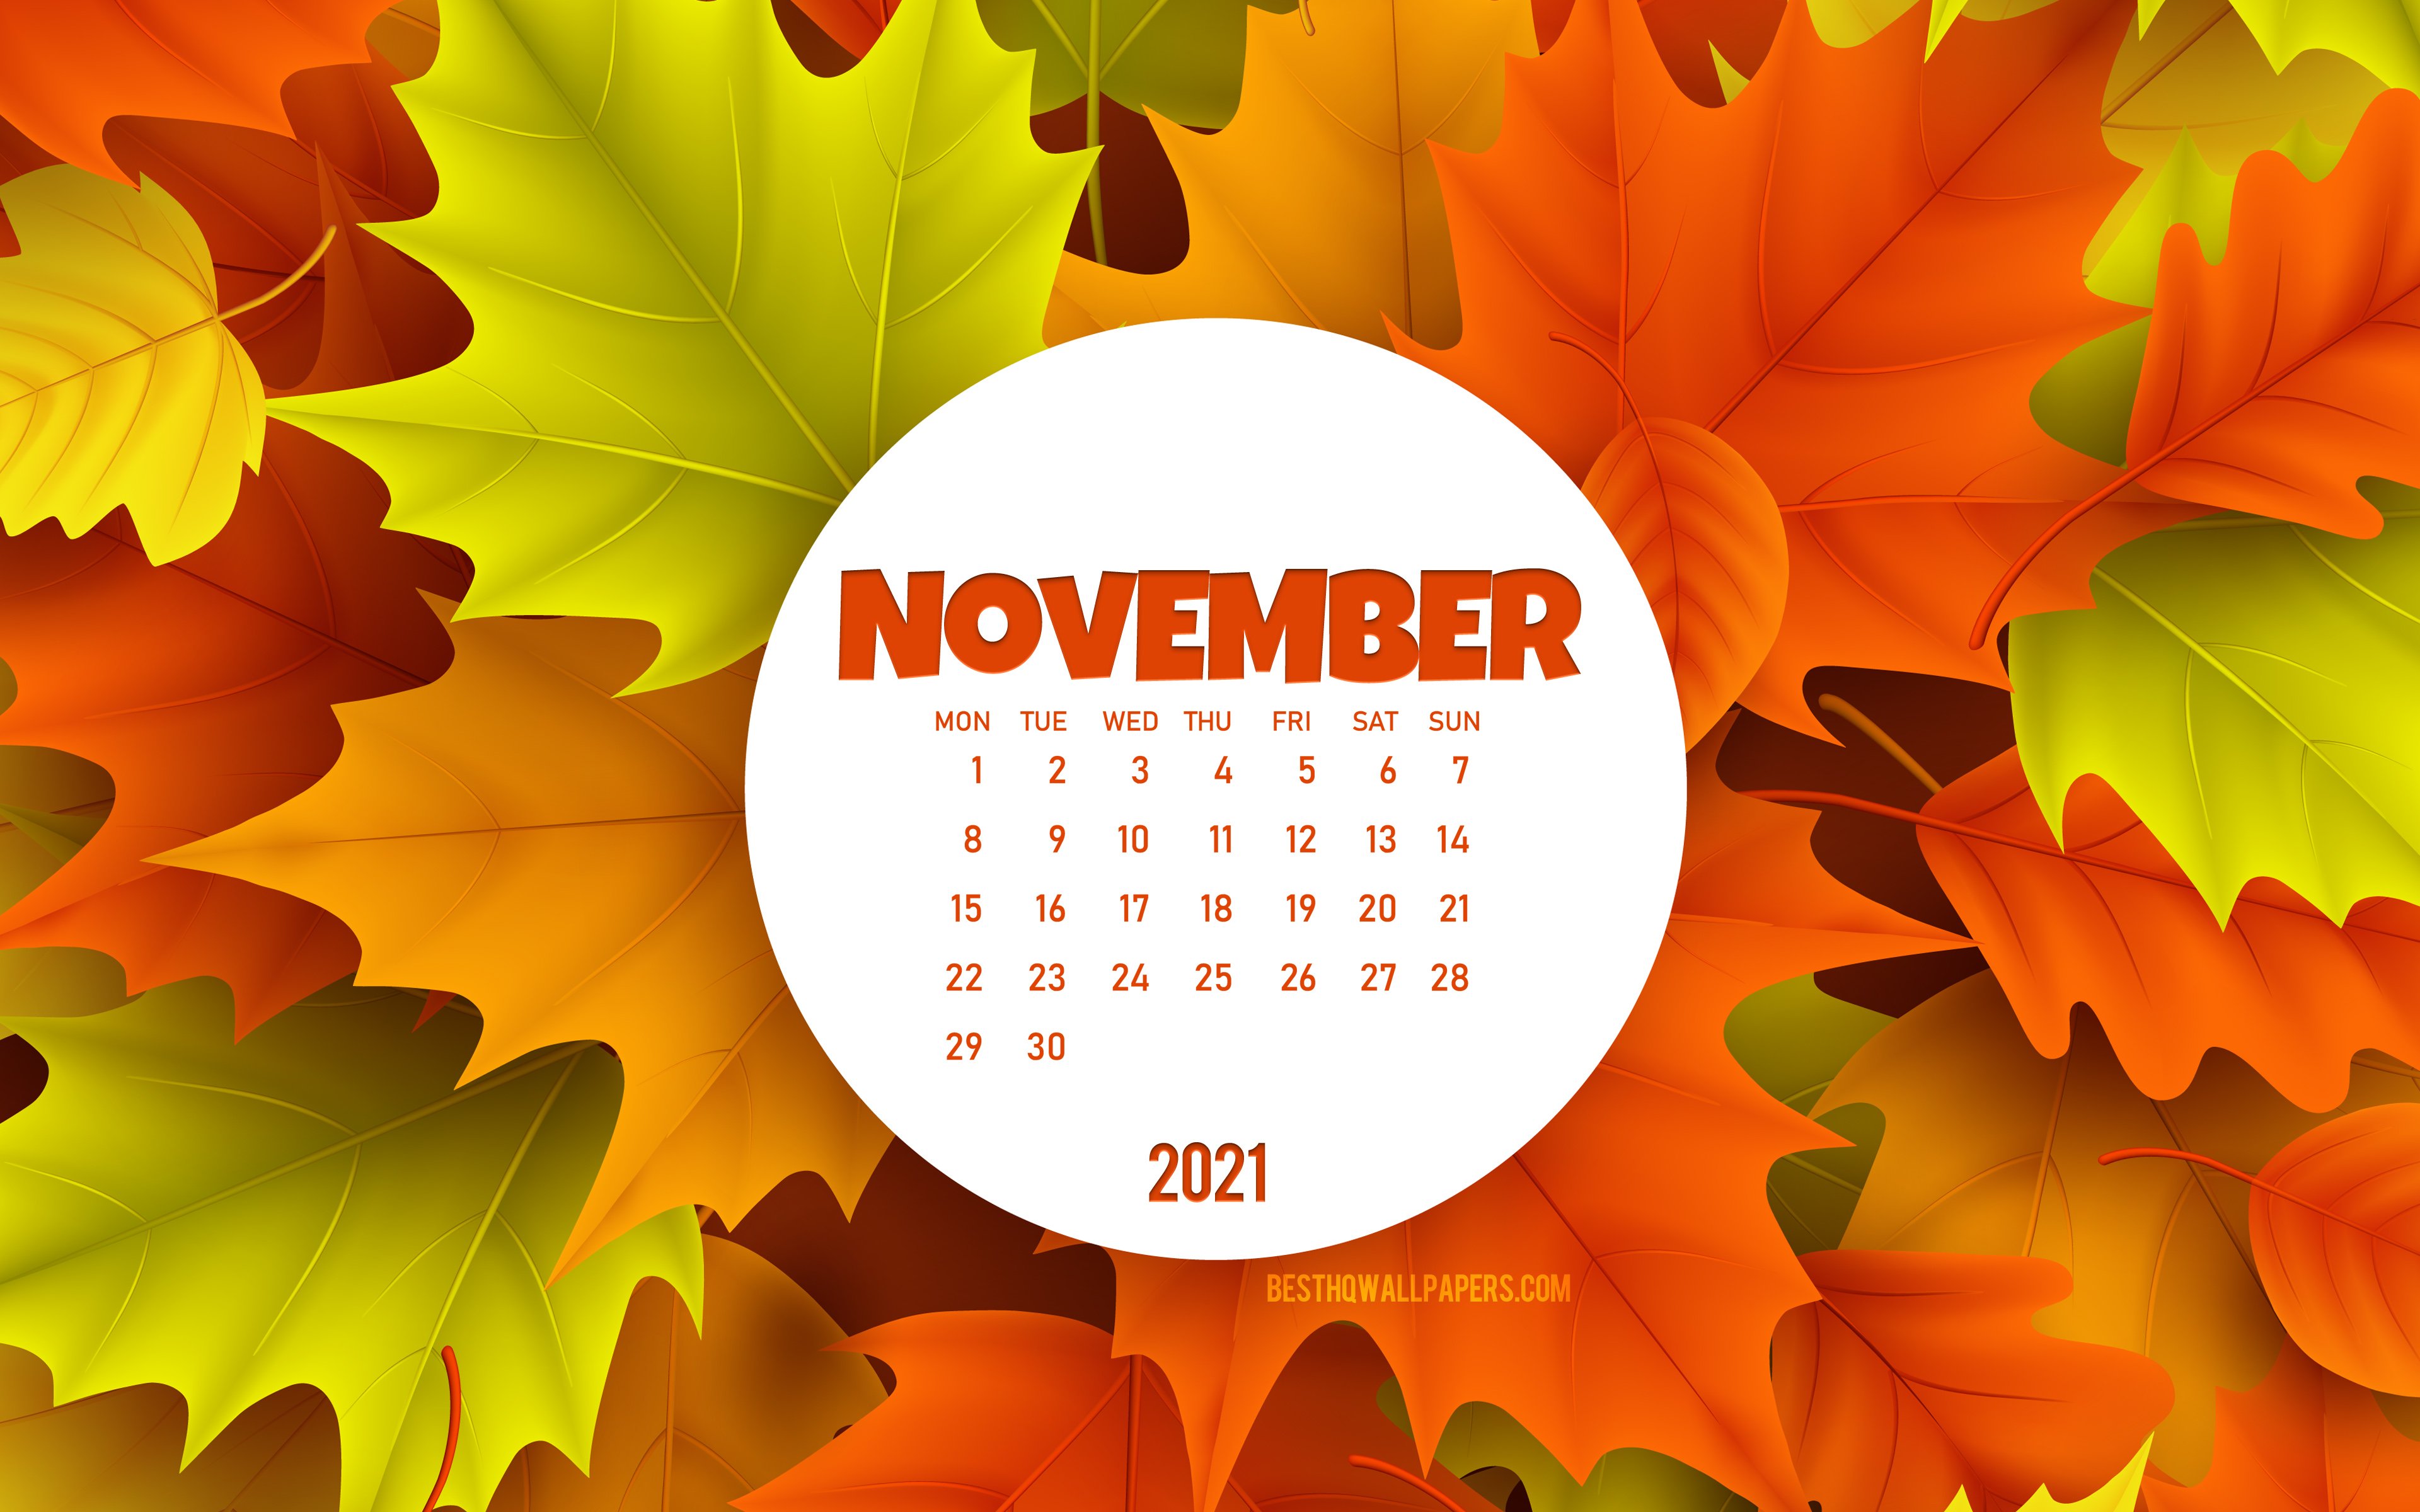 Скачать обои 2021 November Calendar, 4k, background with autumn leaves ...